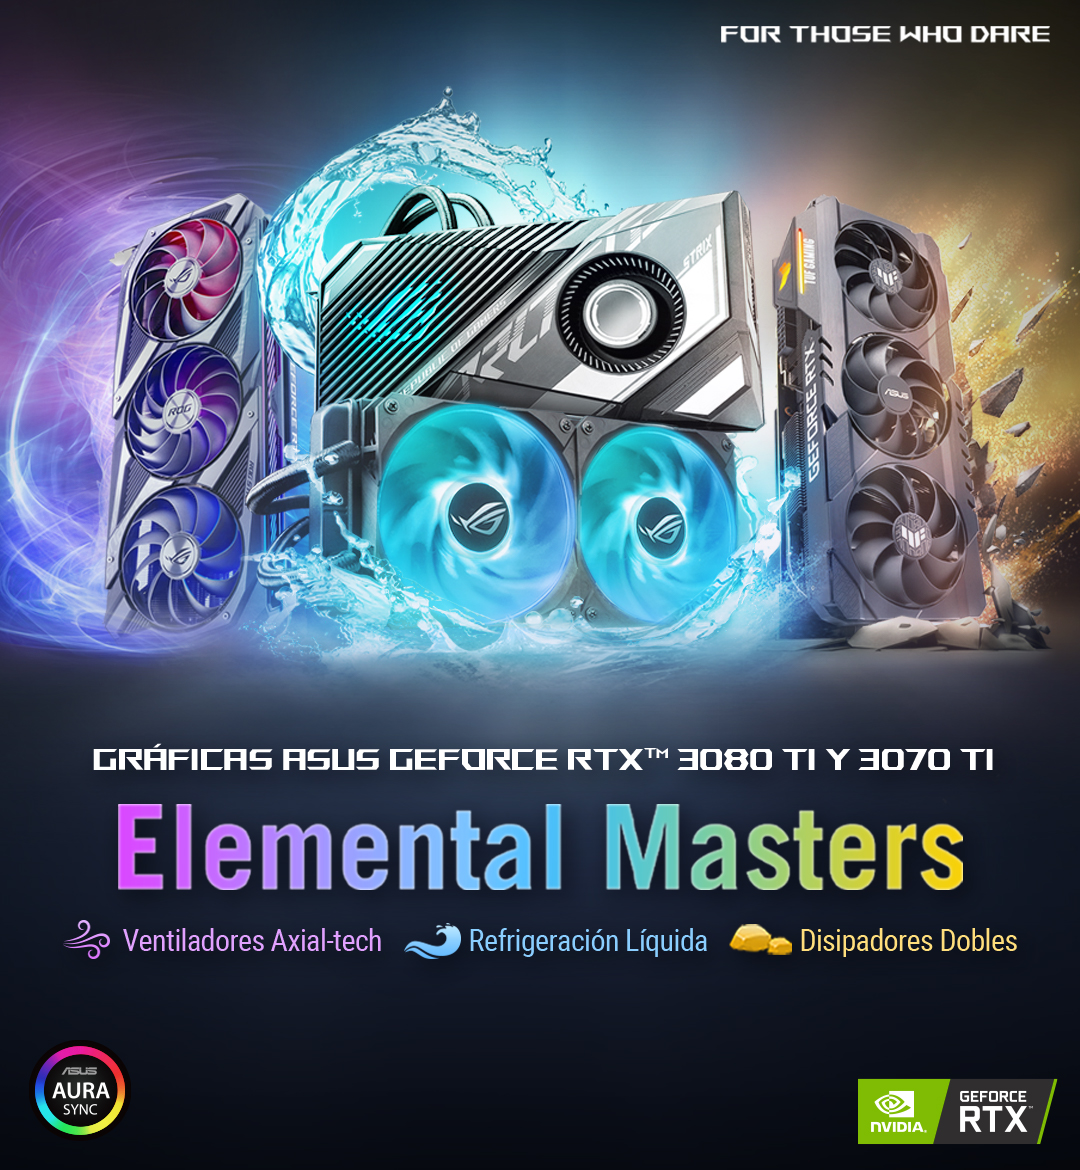 ASUS GeForce RTX 3080 Ti & 3070 Ti Series: Elemental Masters. Axial-tech Fans, Liquid Cooling, Twin Heatsinks